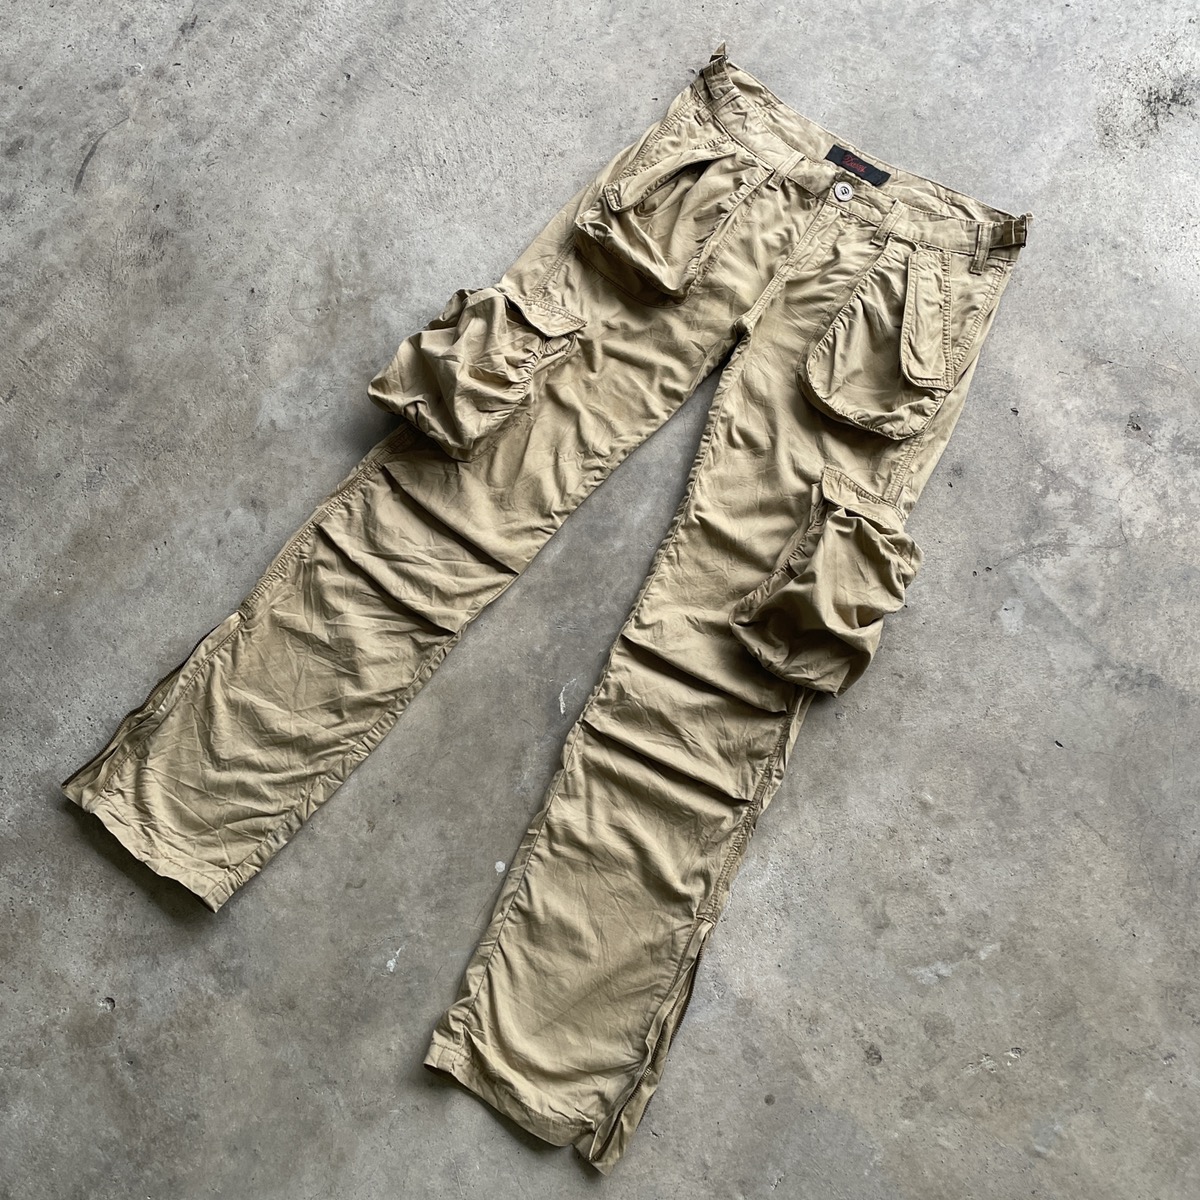 Japanese Brand Nonnative 3D Pocket Tactical Cargo Pants